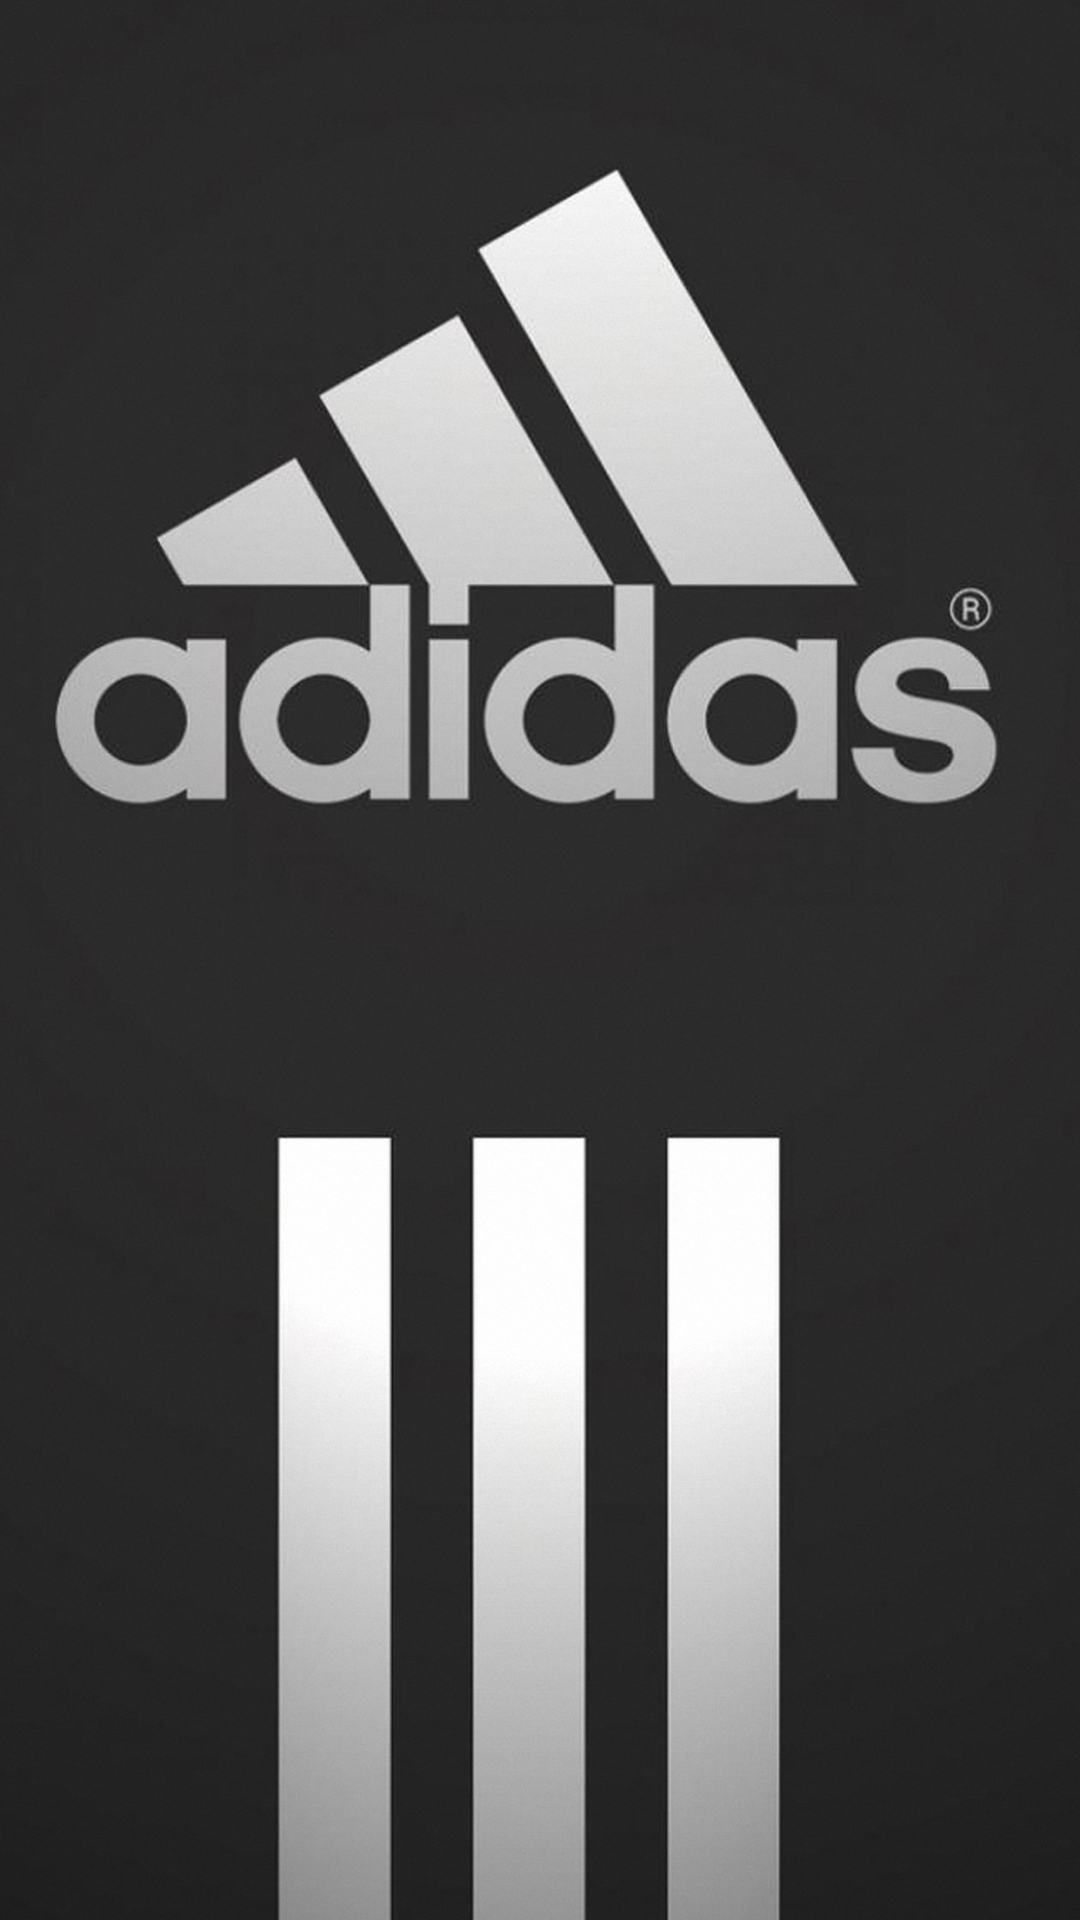 Adidas Iphone Hd Wallpaper Pixelstalk Net